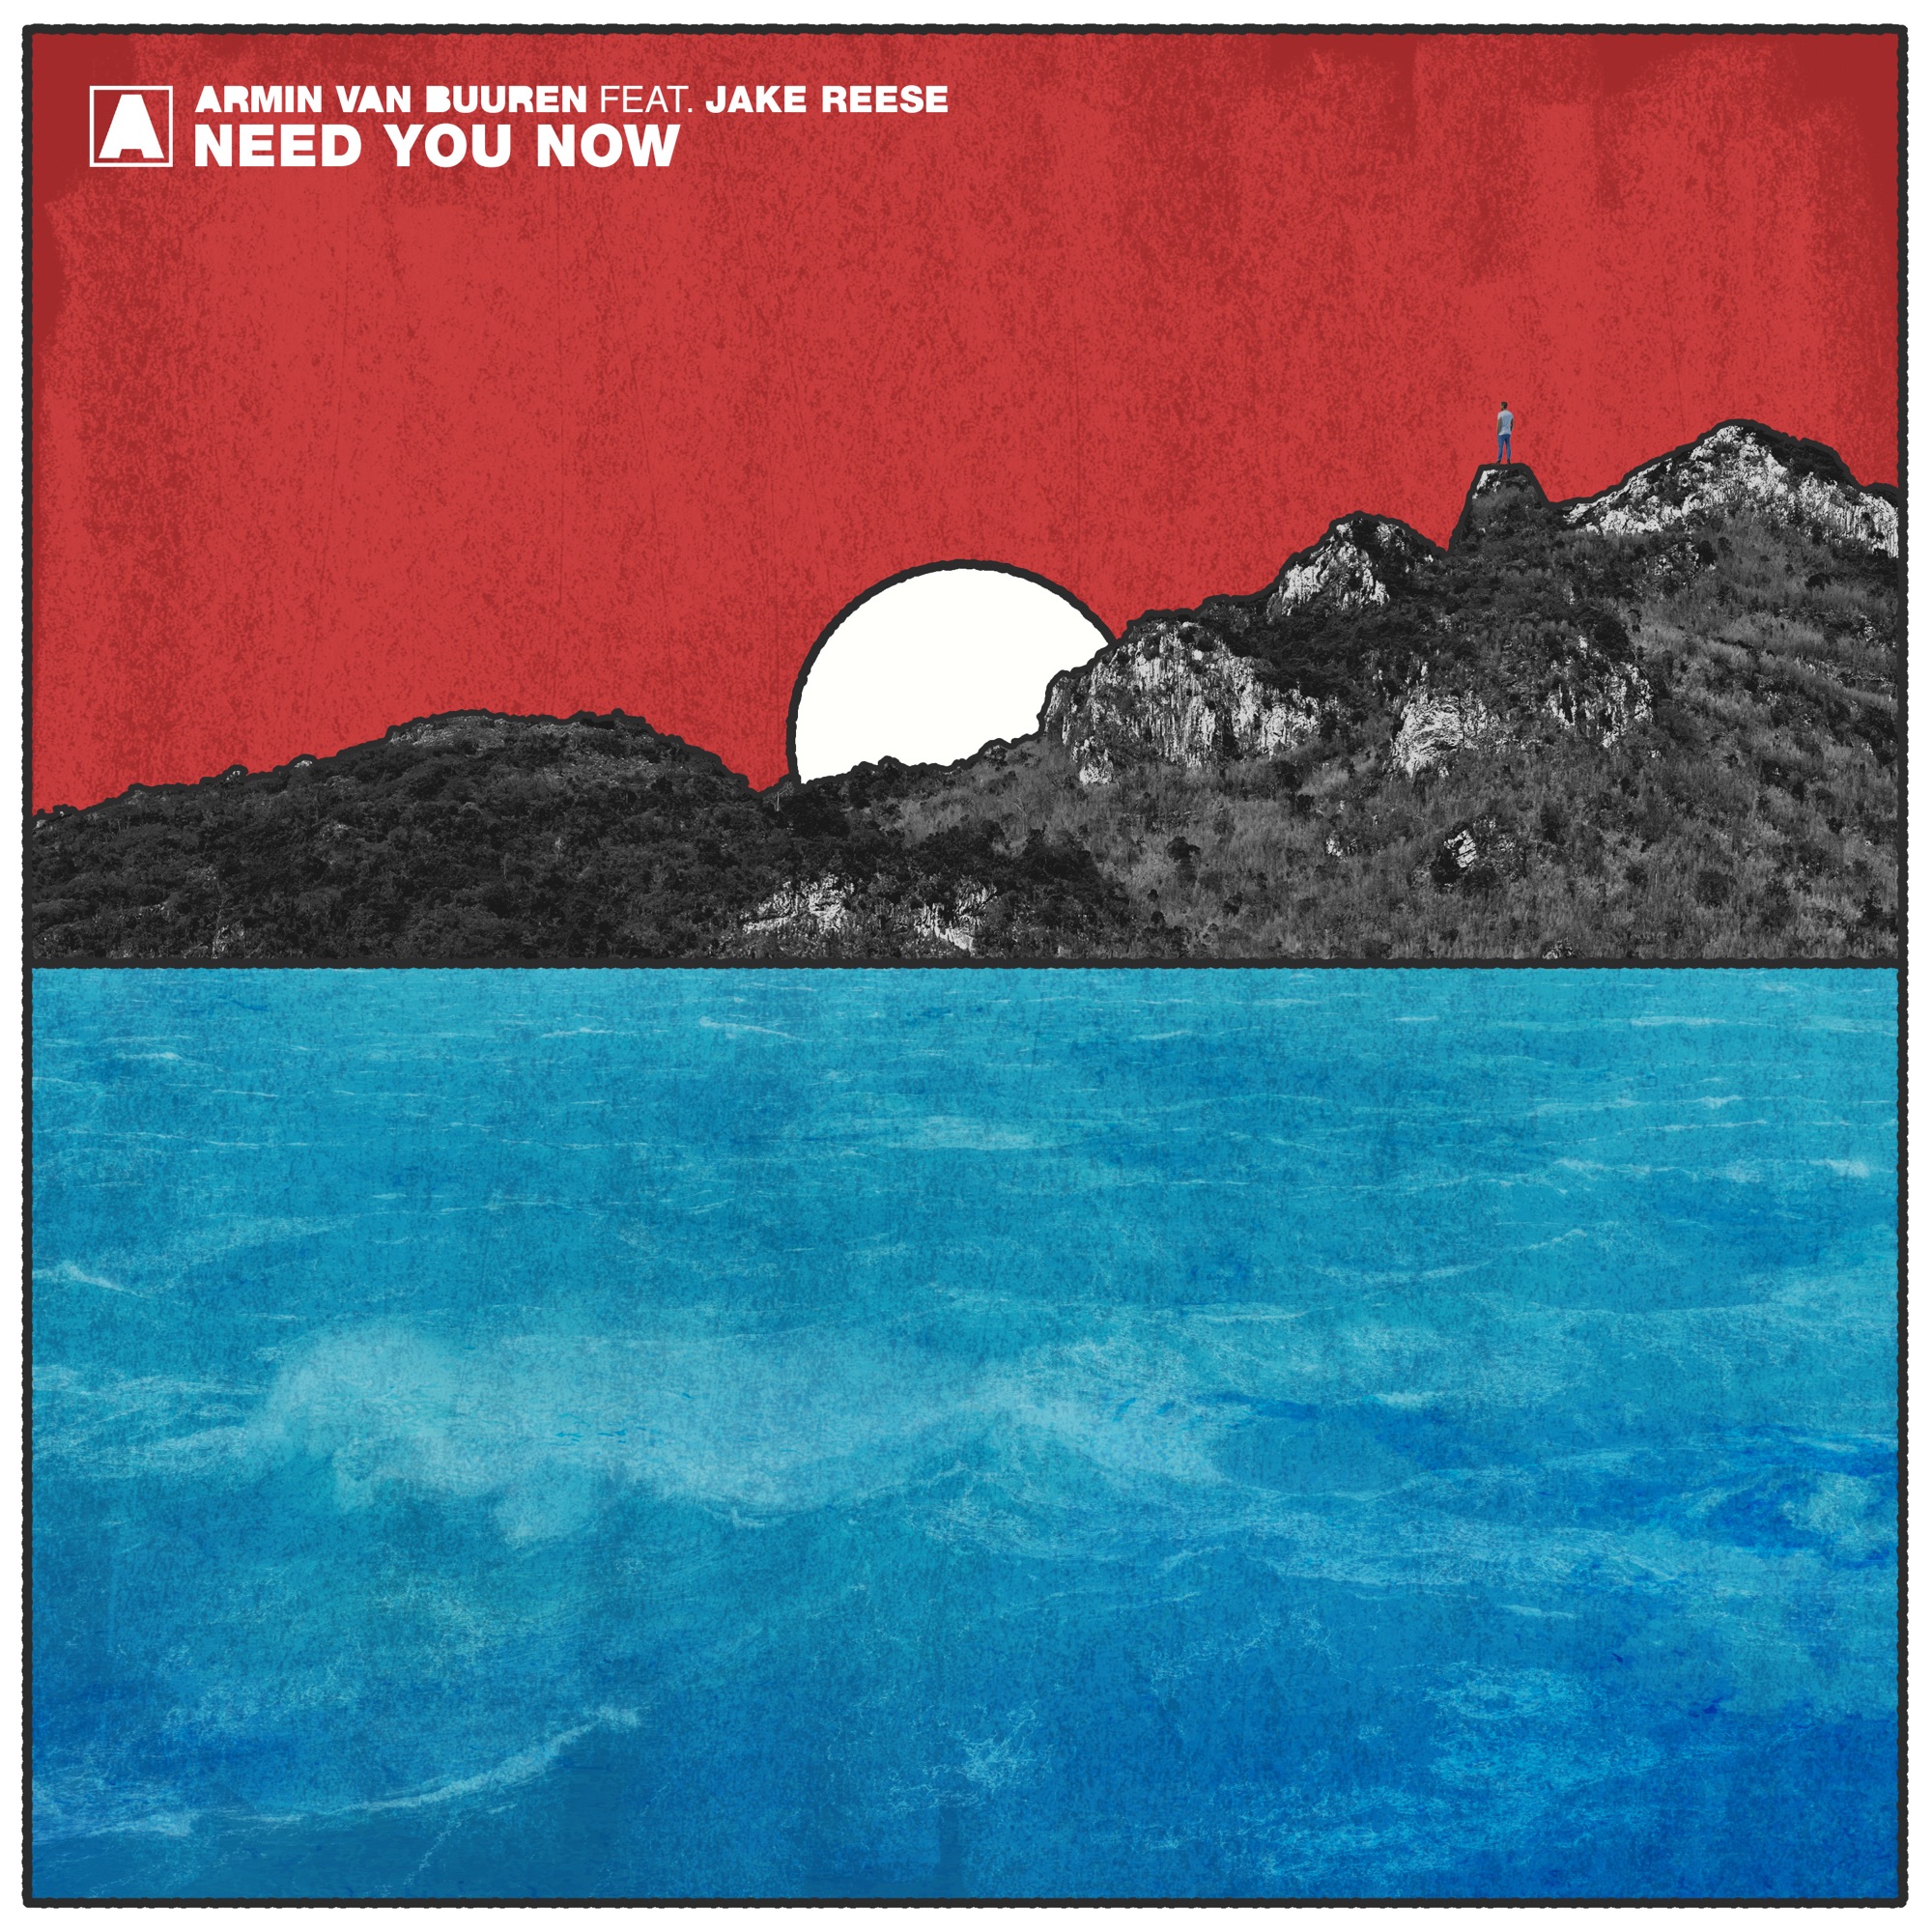 Armin van Buuren - Need You Now (feat. Jake Reese) - Single